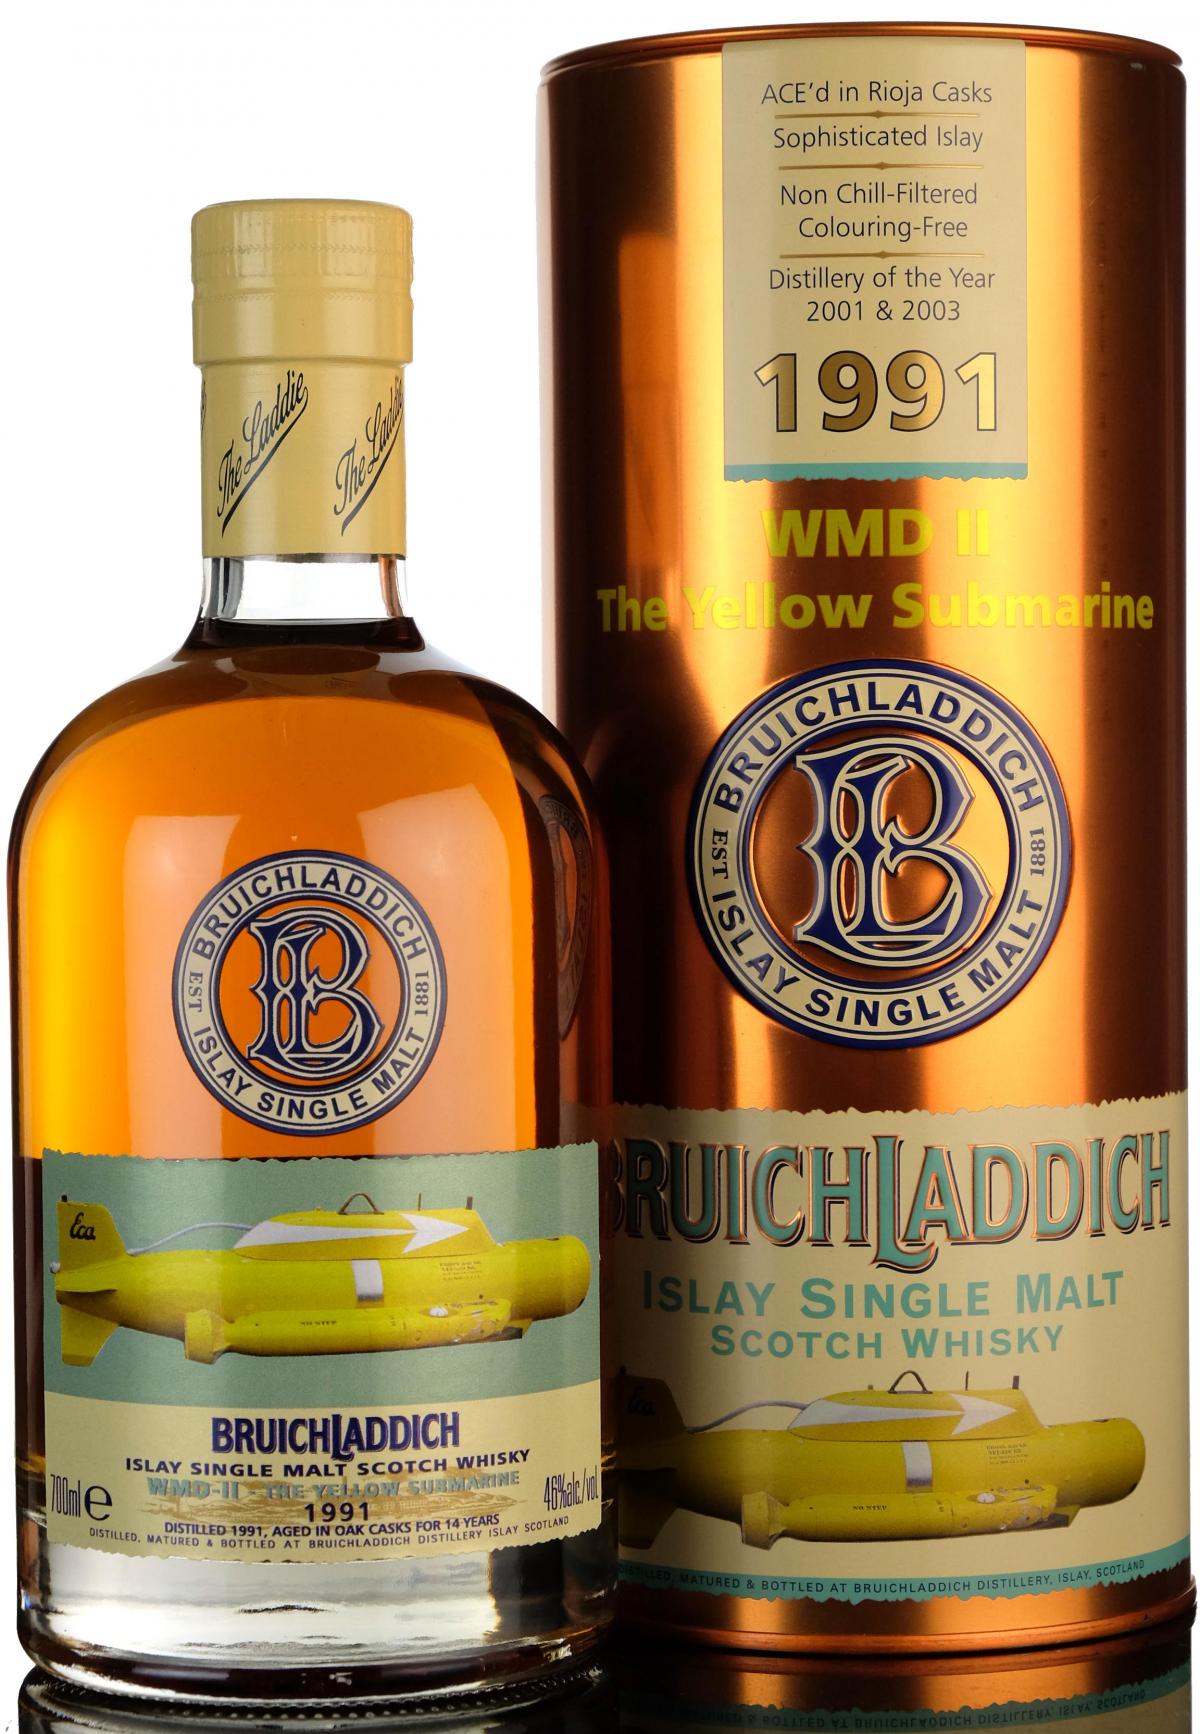 Bruichladdich 1991 - Yellow Submarine - WMD 2